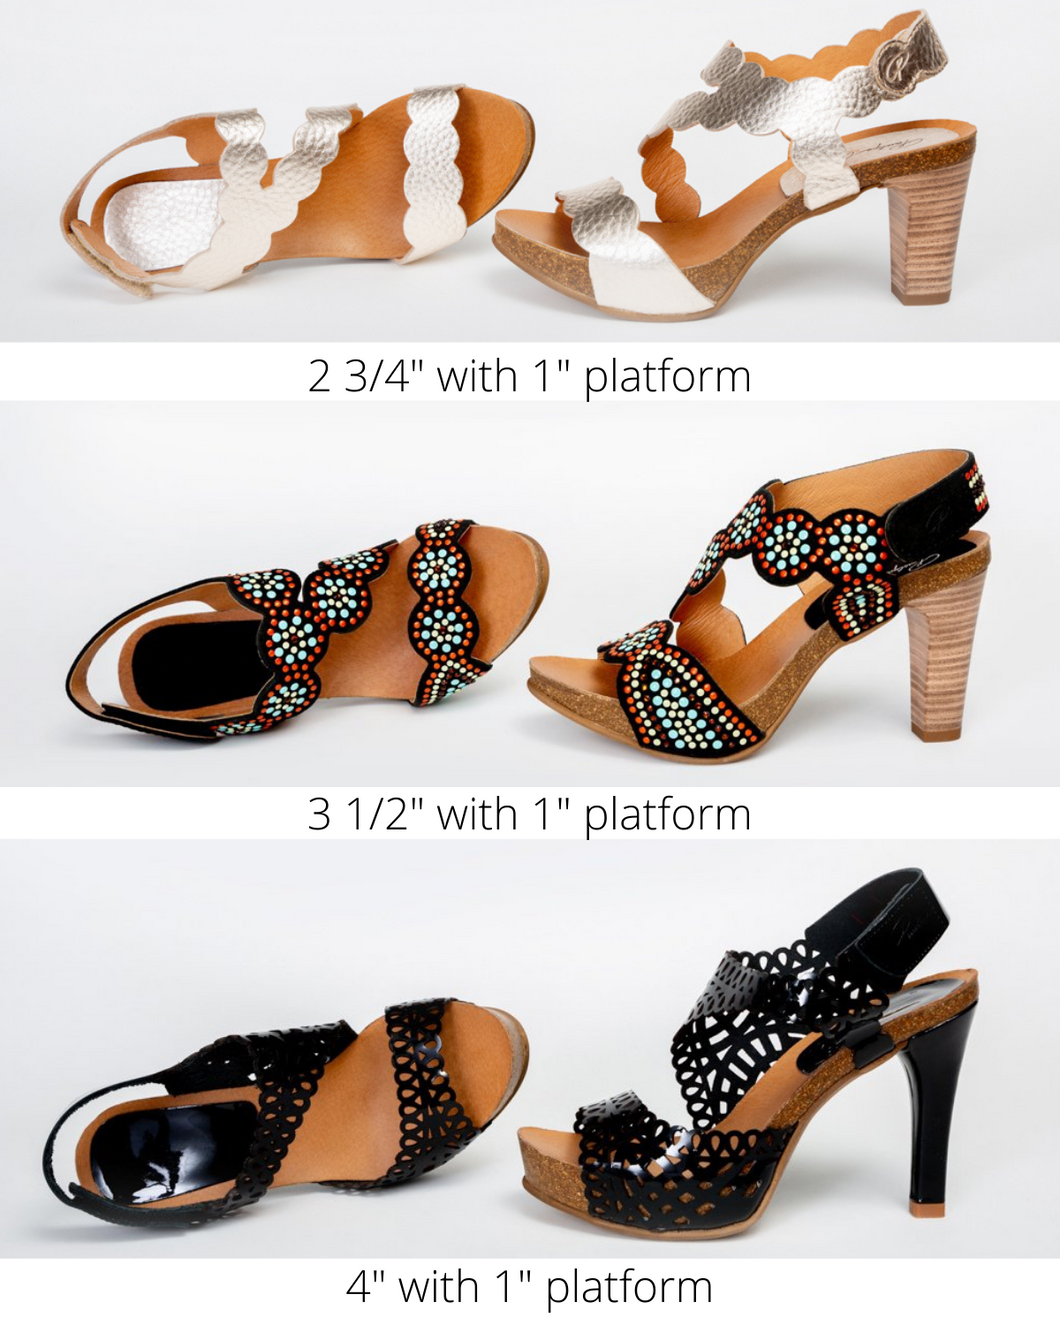 Women's Shoes 10.24in Heel Height Sexy PU Chunky Heel Platform Sandals High  Heels US size 4-10.5 No.10326-3 - AliExpress